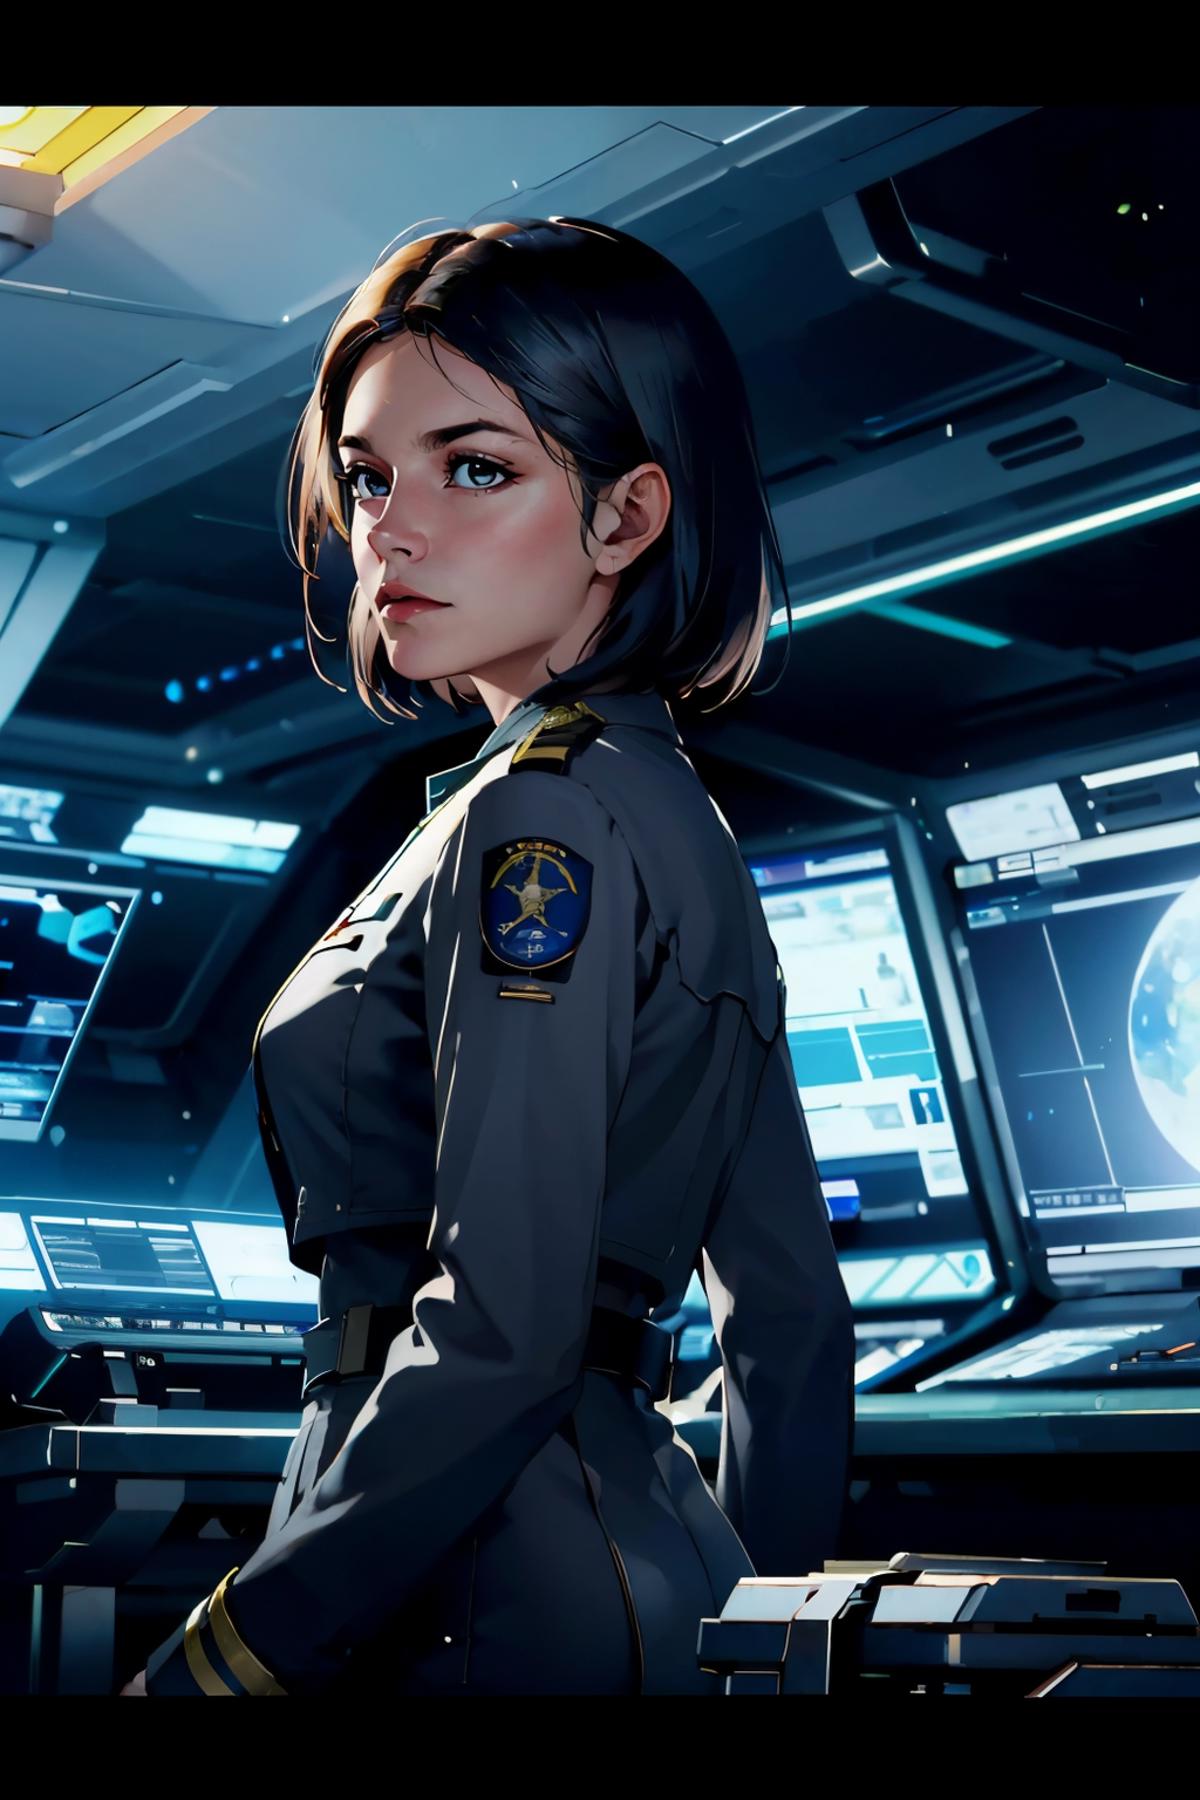 Miranda Keyes (Halo 2 cinematic) image by wikkitikki